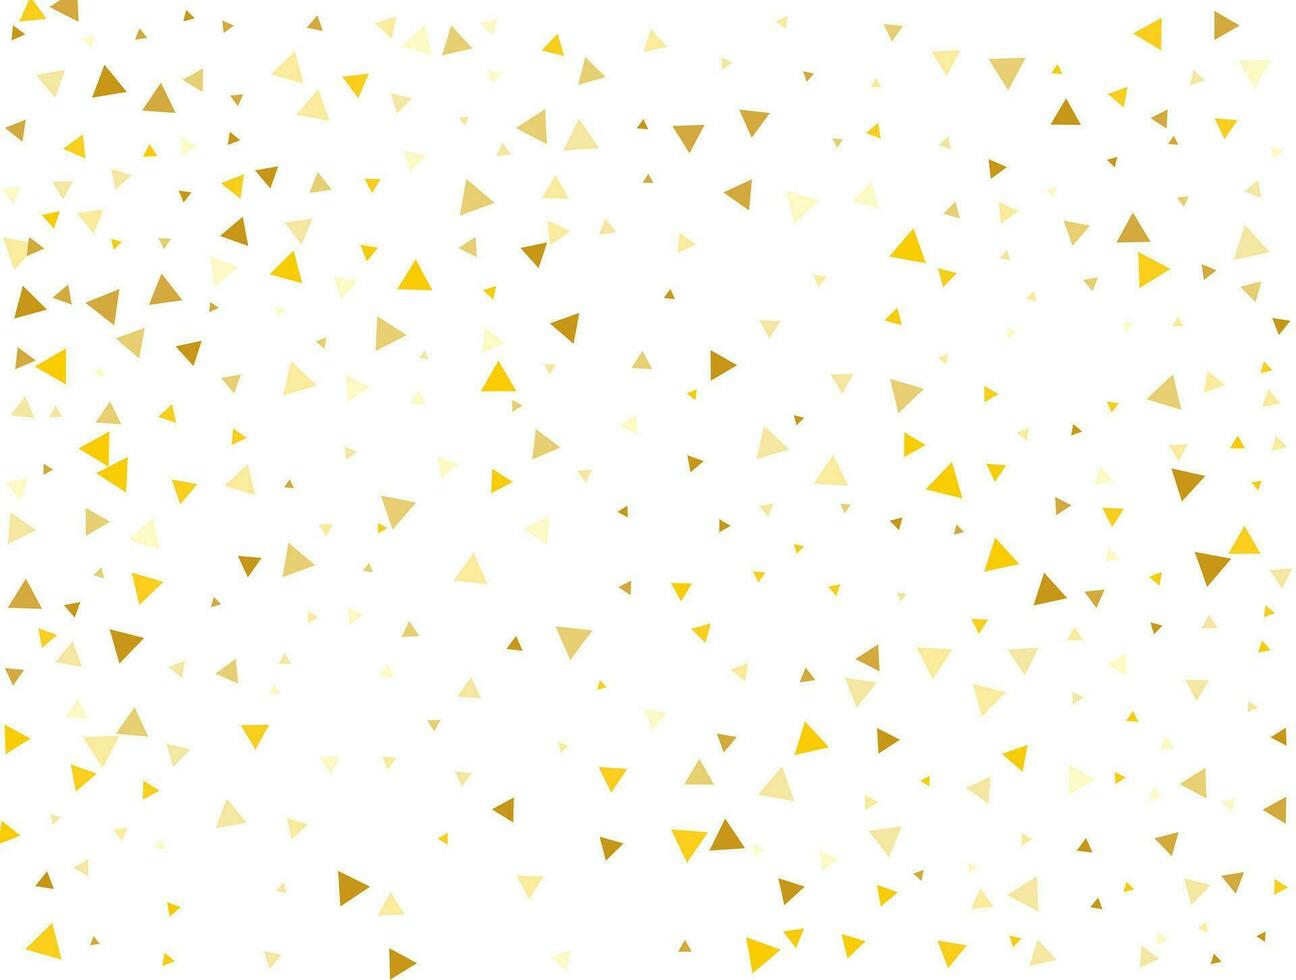 Light Golden glitter Triangular confetti. Pastel holiday textur vector